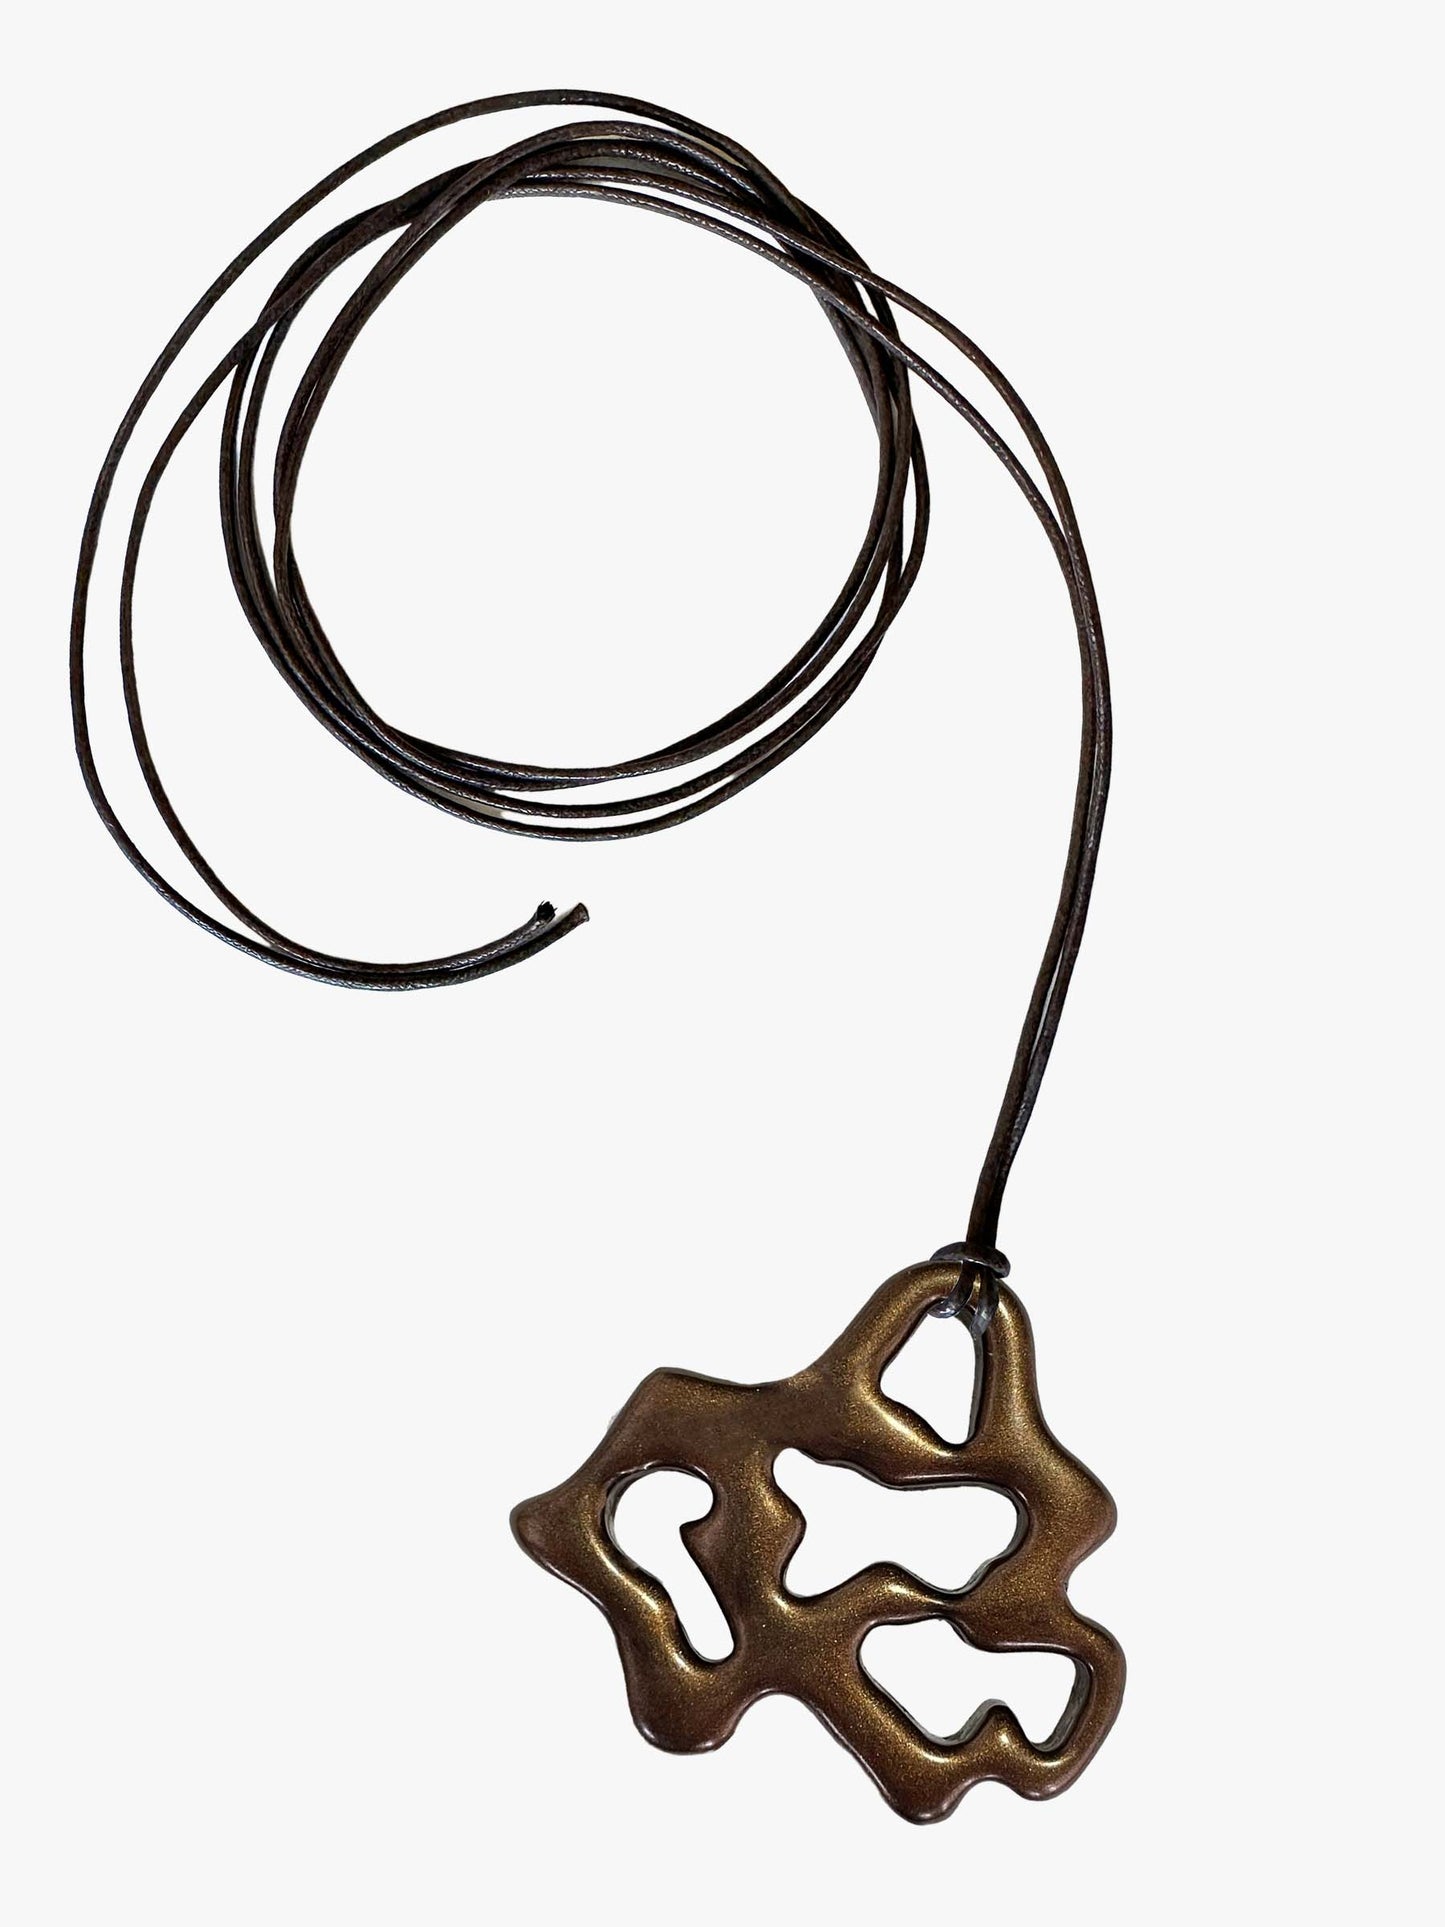 Avu metallic brown lace necklace